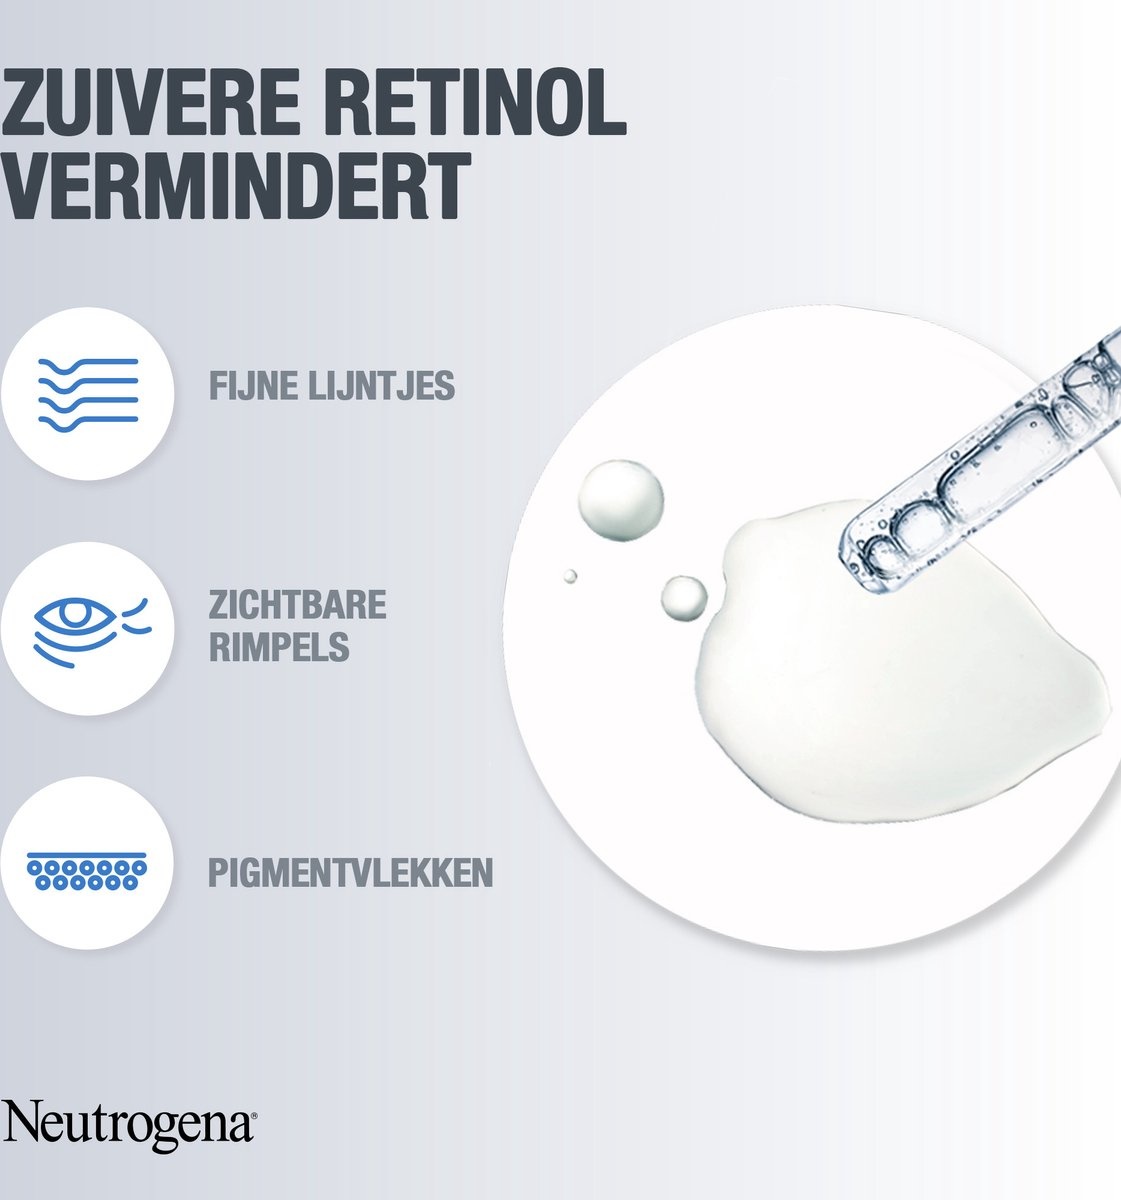 Neutrogena Night Cream Retinol Boost - 50 ml